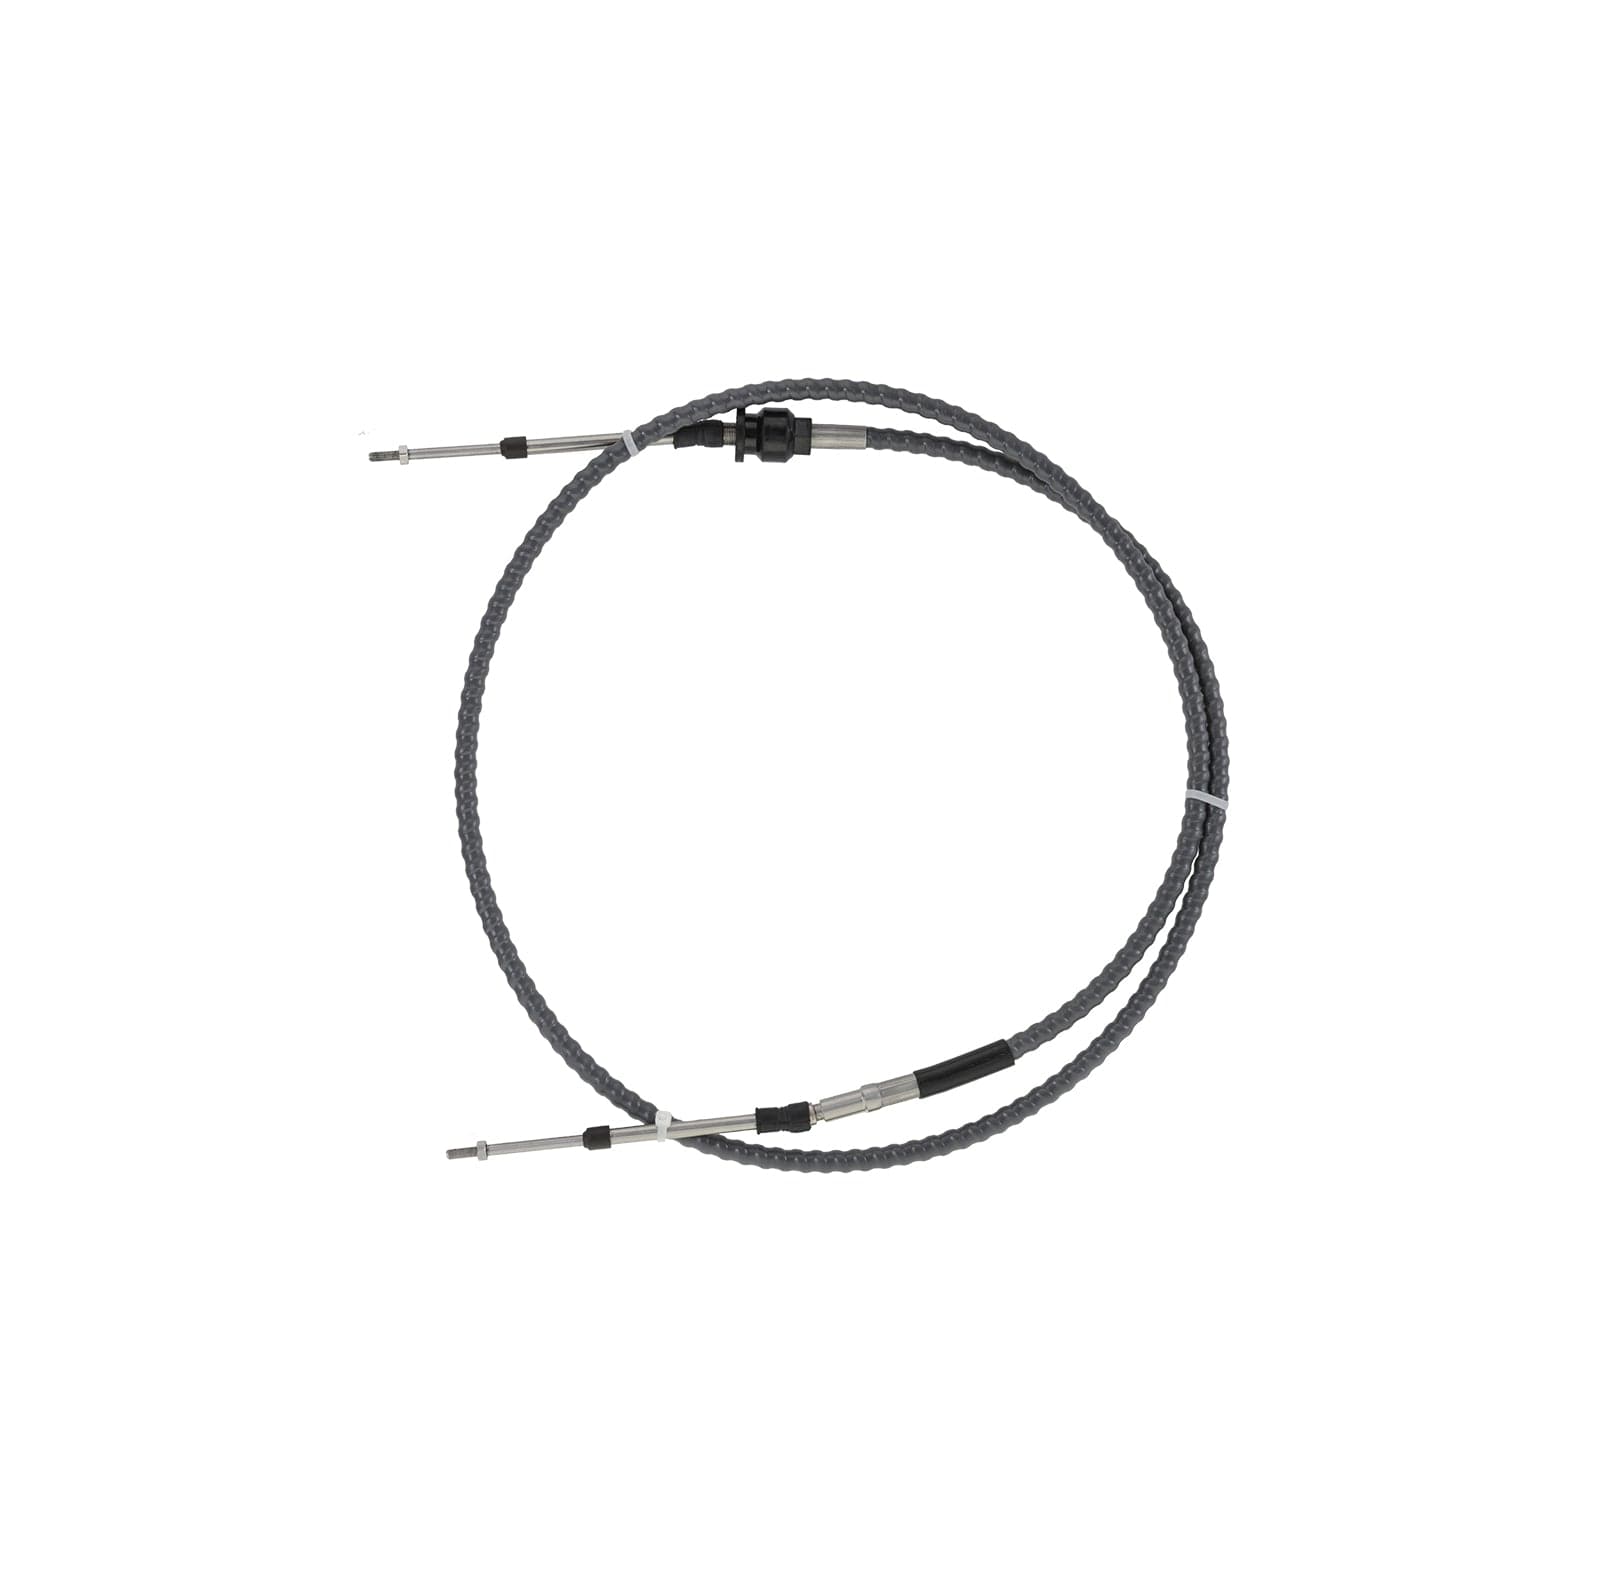 SBT Steering Cable for Sea-DooGTX 4-Tec LTD/SC/STD/Wake/RXT/RXT 215